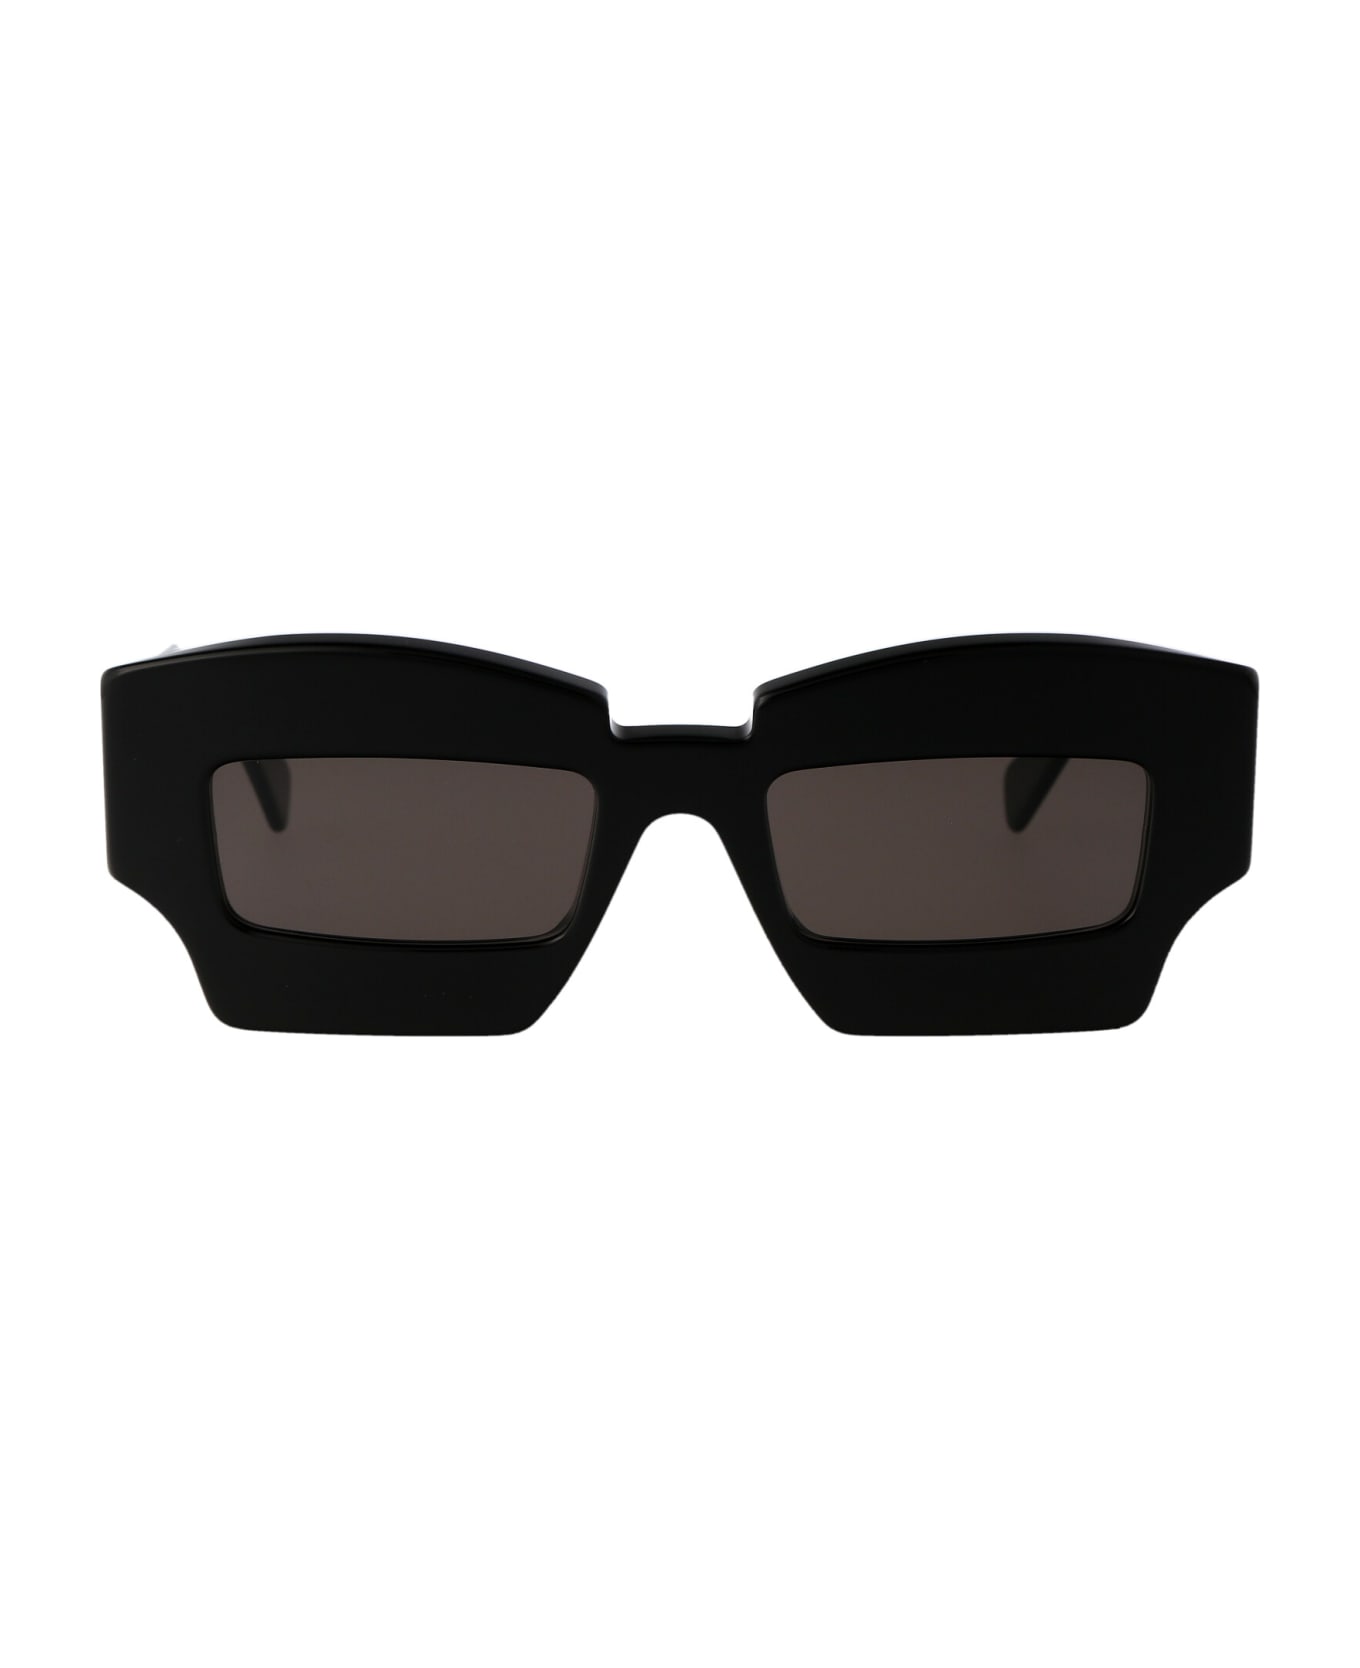 Kuboraum Maske X6 Sunglasses - BS dark brown サングラス